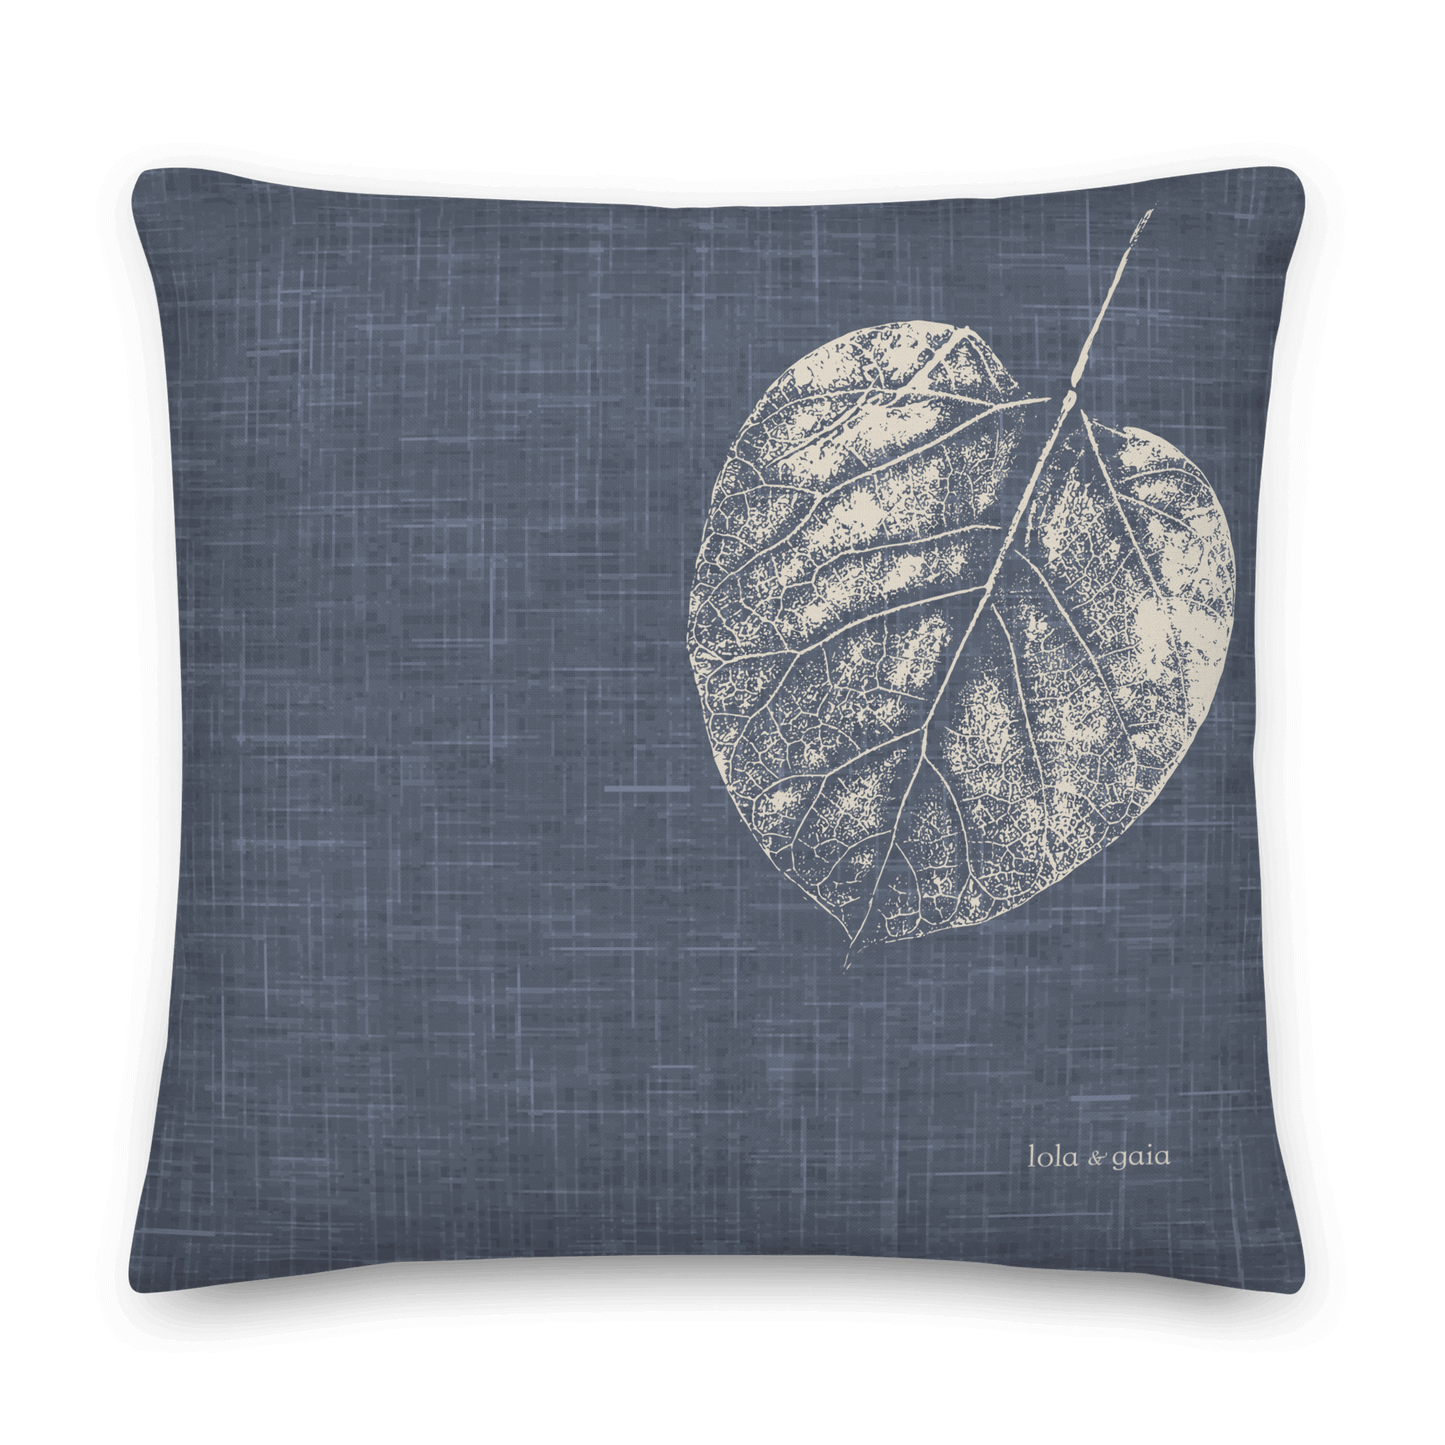 Catalpa Leaf Pillow, Blue Linen